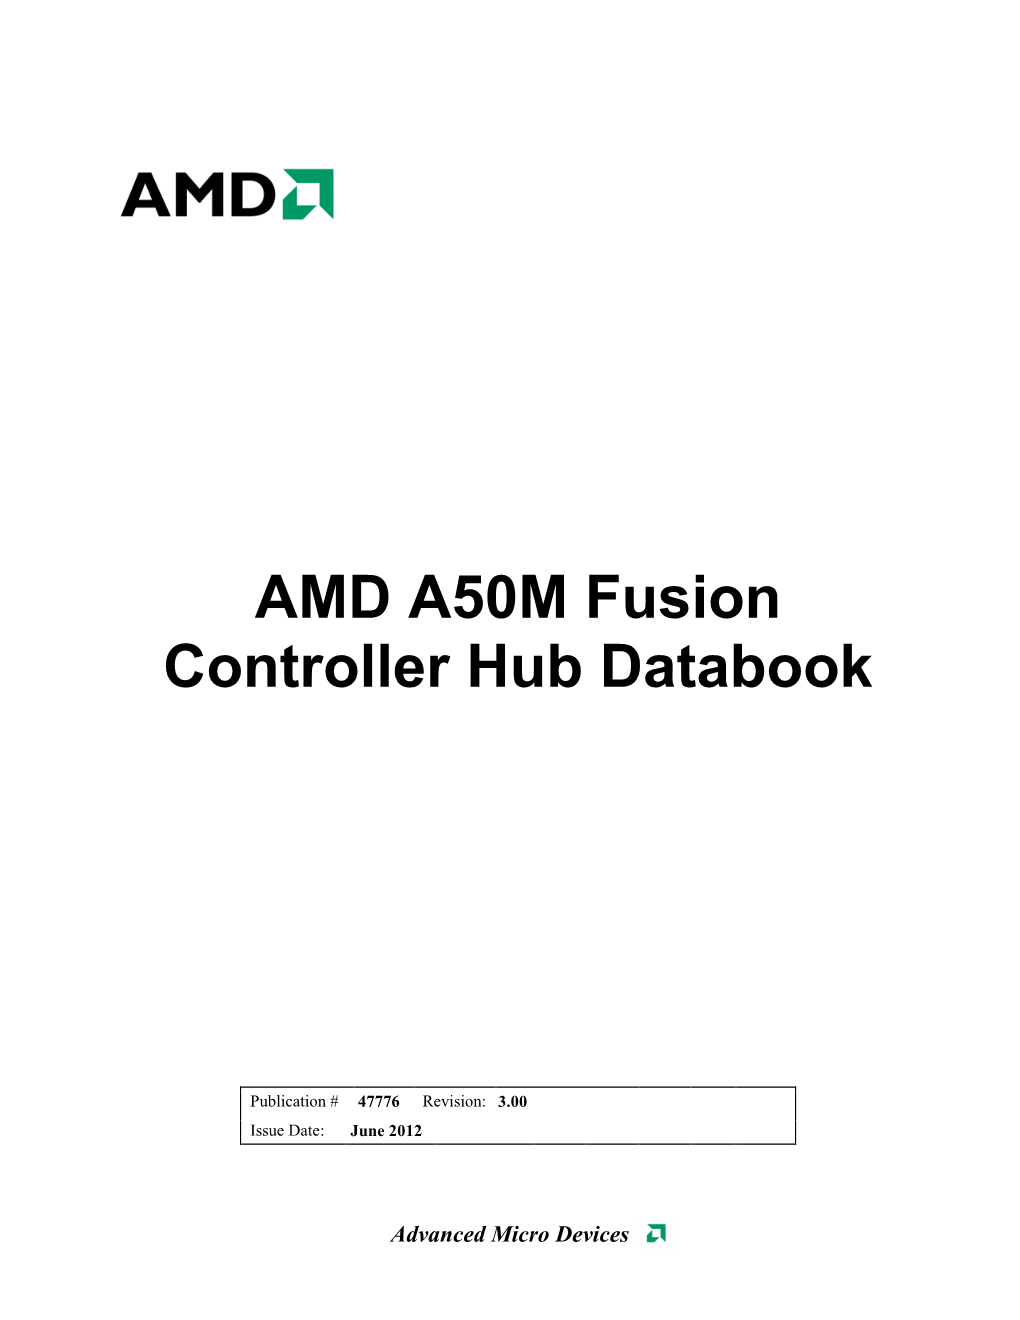 AMD A50M Fusion Controller Hub Databook